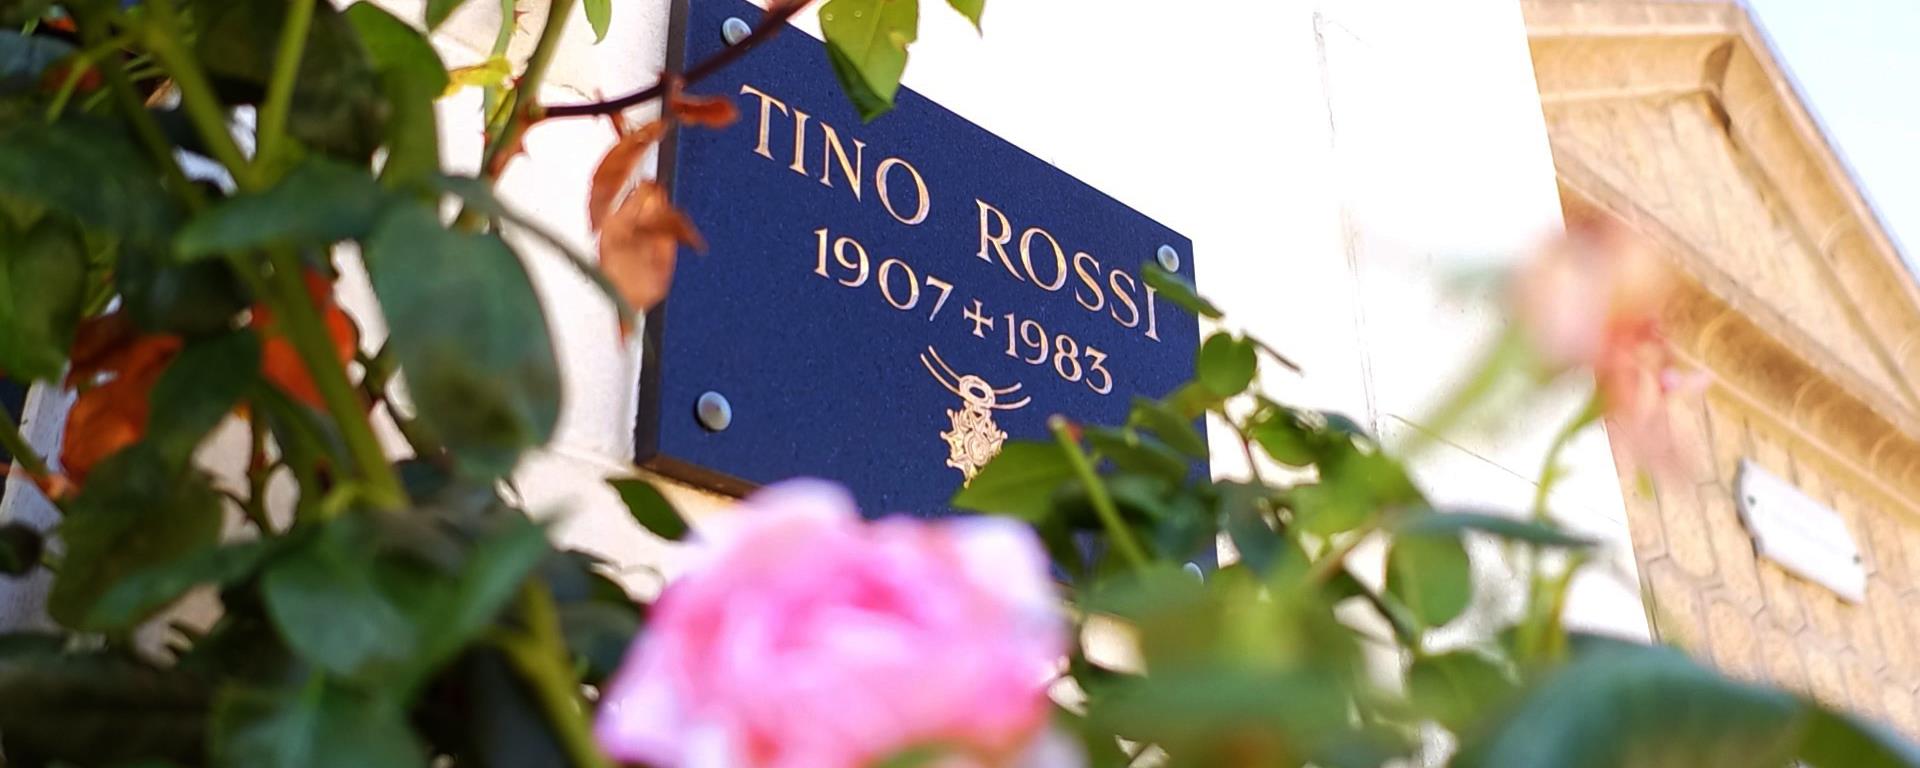 2018 - visite cimetière Sanguinaires - Plaque Tino Rossi OIT